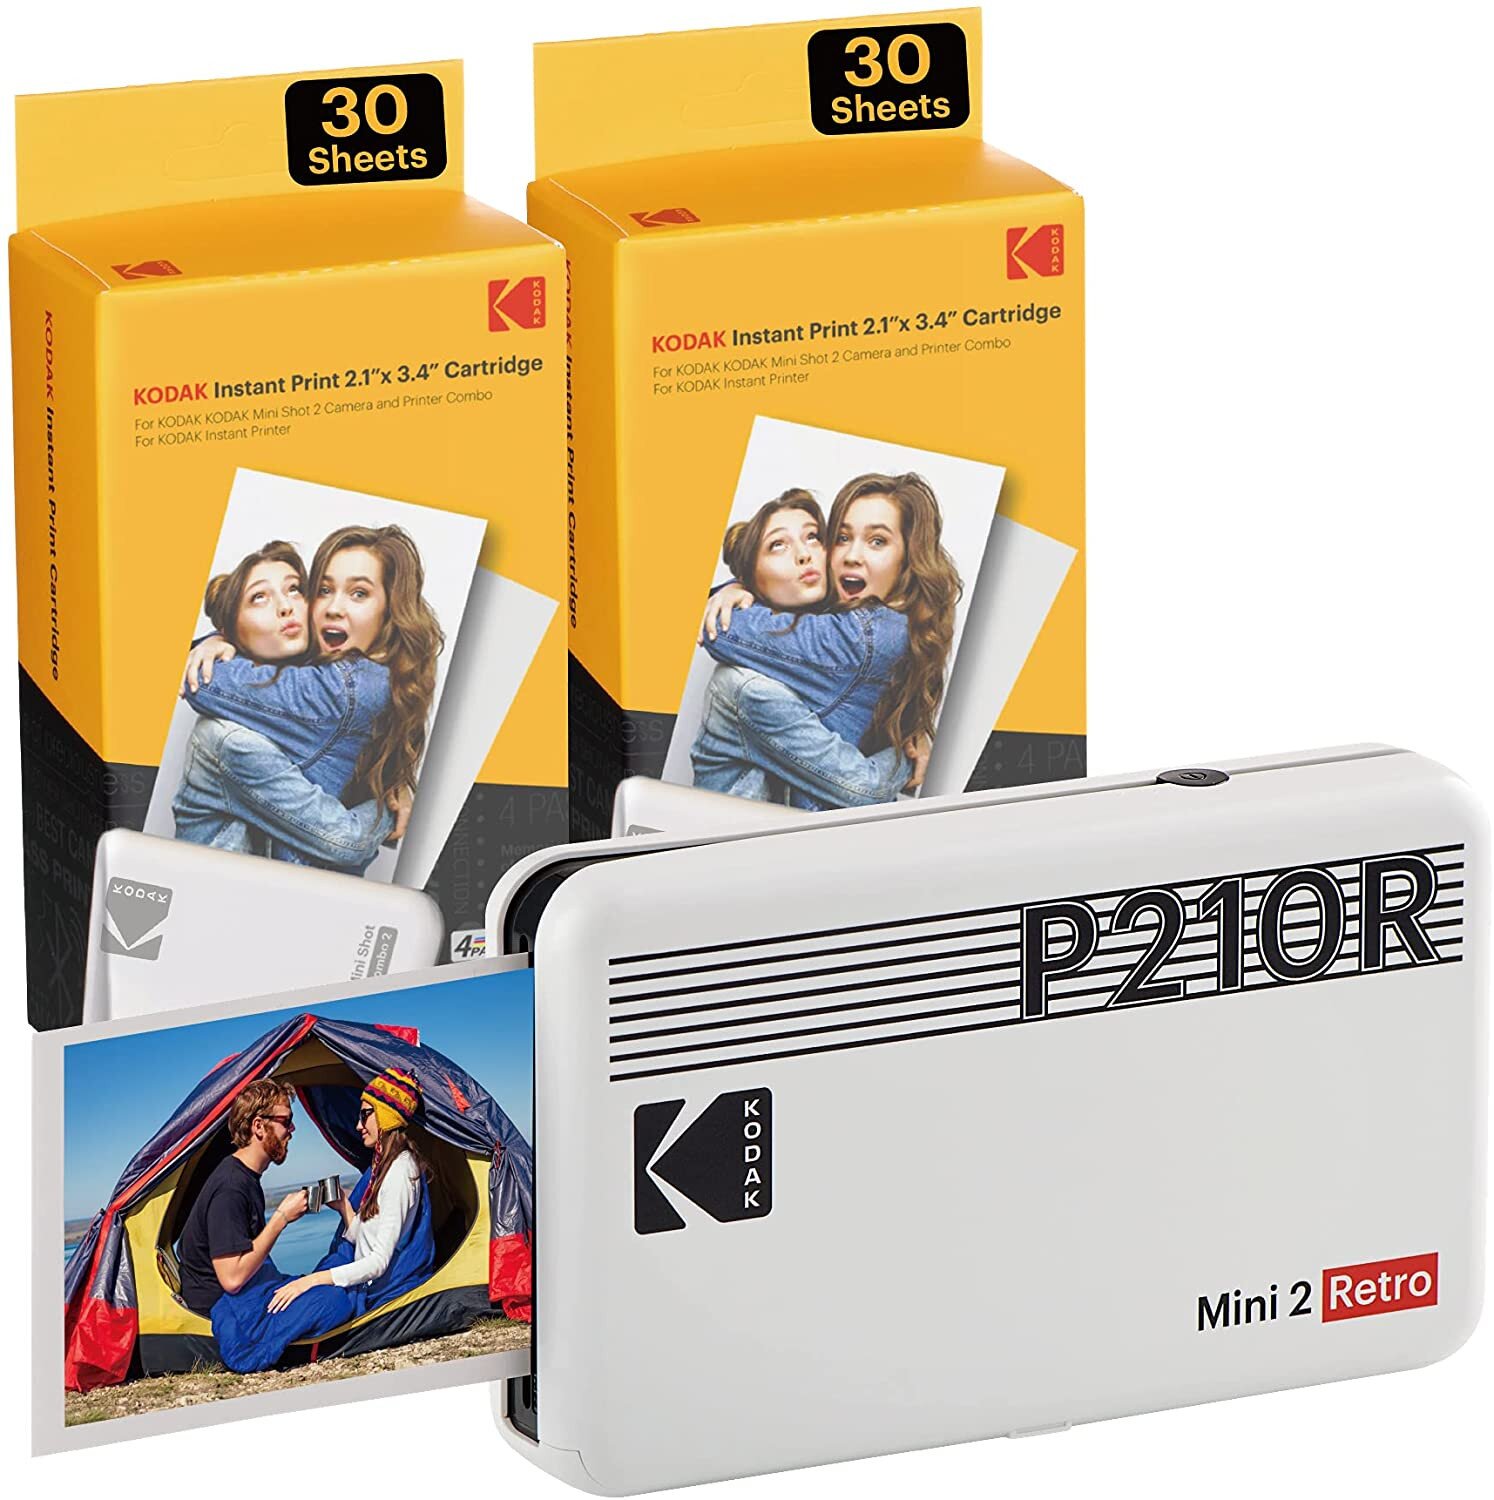 The Kodak Mini 2 Retro Portable Photo Printer is on sale at